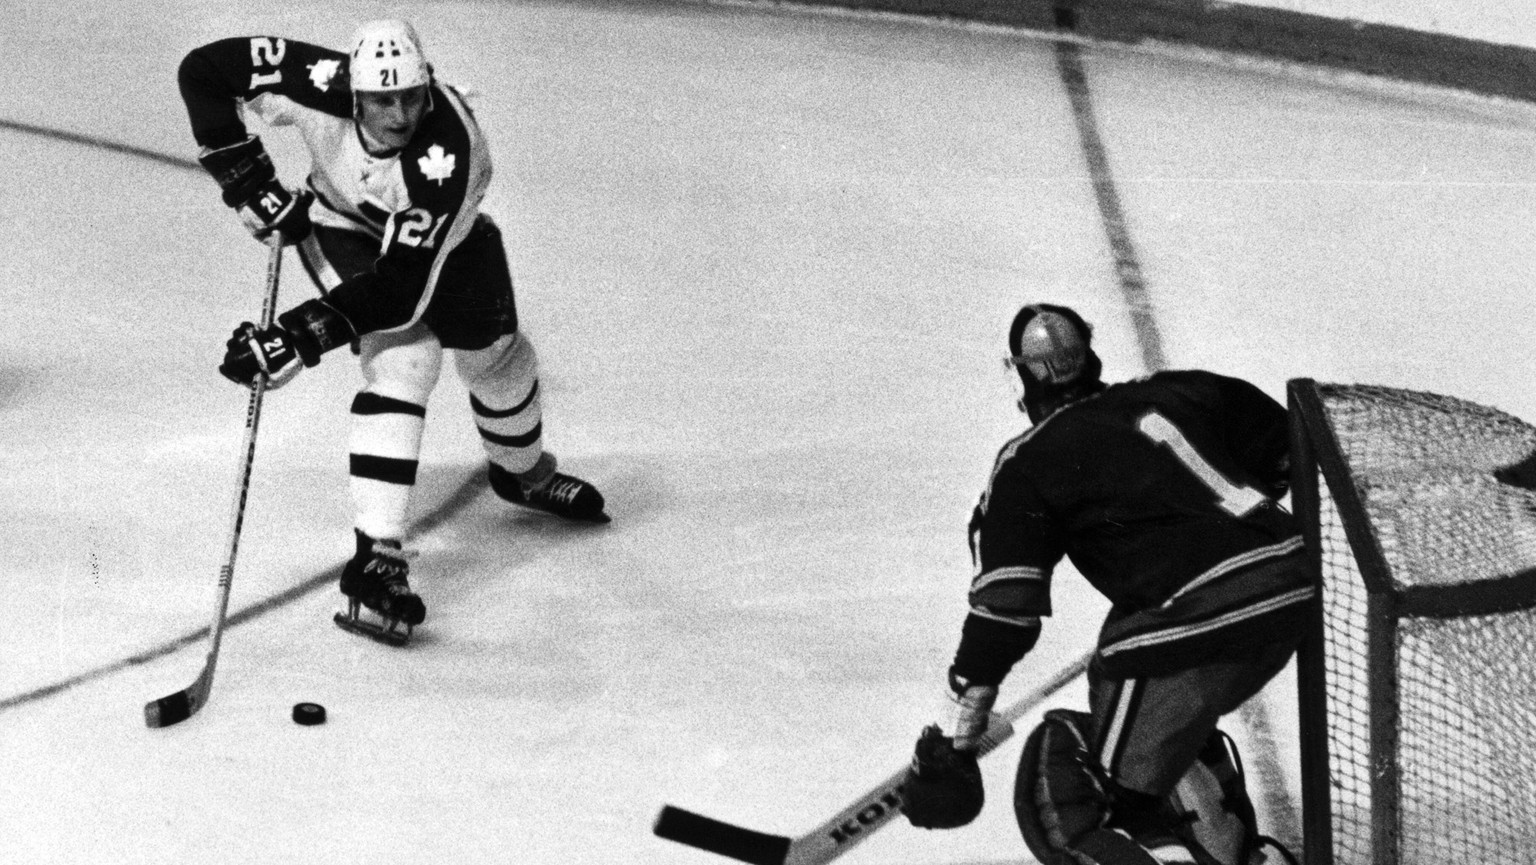 Borje Salming, Toronto Maple Leafs, Canada in 1974. TORONTO CANADA PB-KOD: 12 x12x *** Borje Salming, Toronto Maple Leafs, Canada in 1974 TORONTO CANADA PB KOD 12 x12x PUBLICATIONxNOTxINxDENxNORxSWExF ...